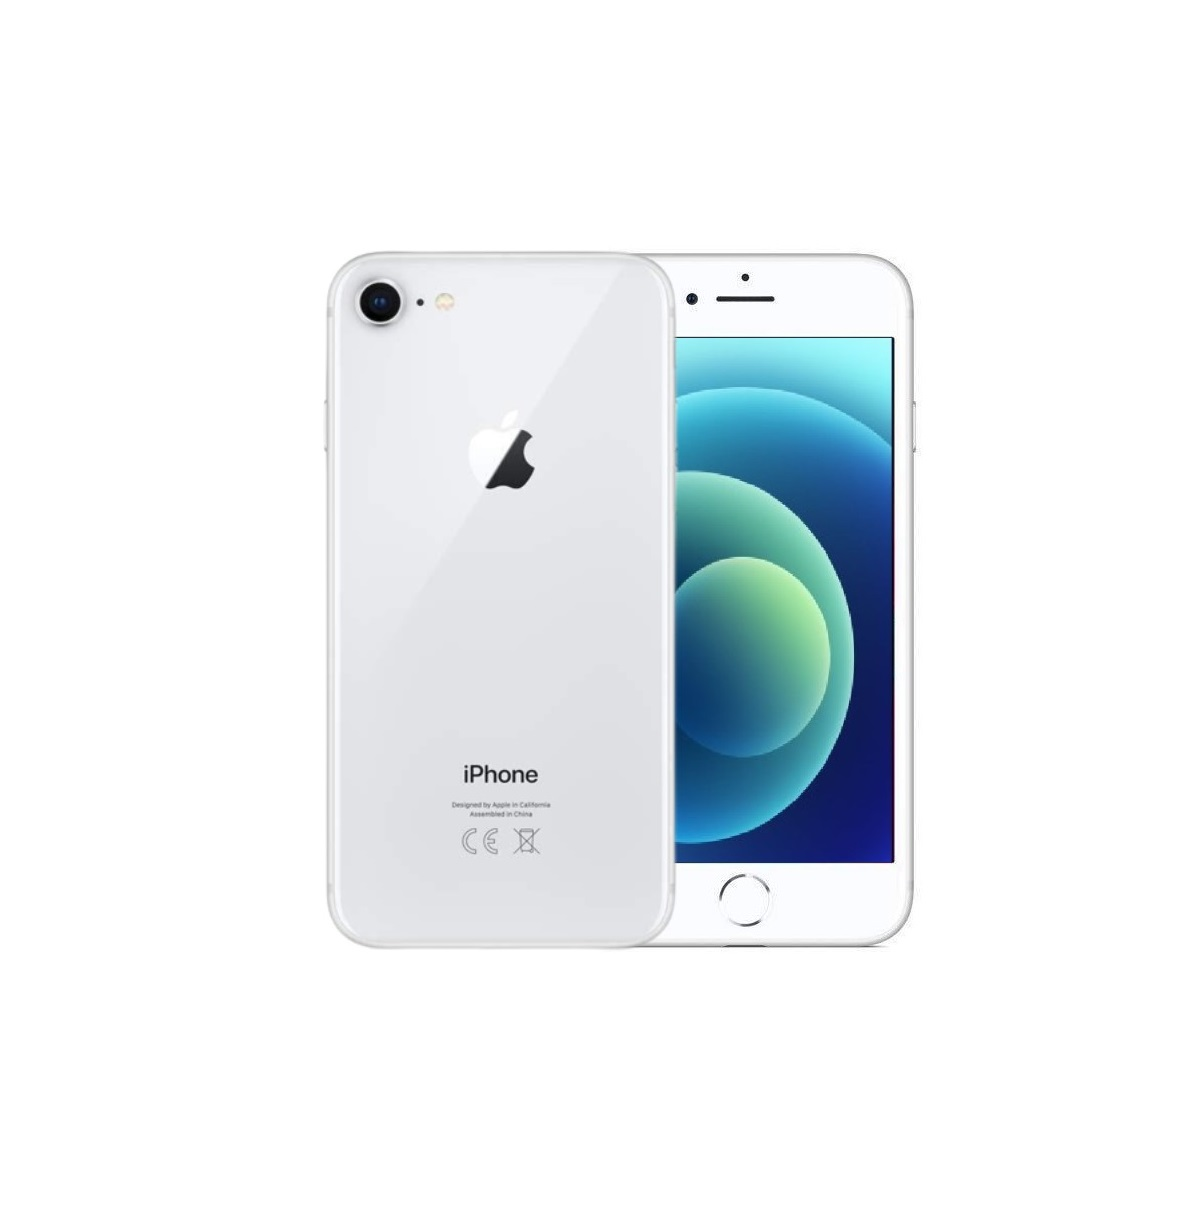 iPhone Silber 128 GB Apple REFURBISHED APPLE 128 8 GB Silber (*)